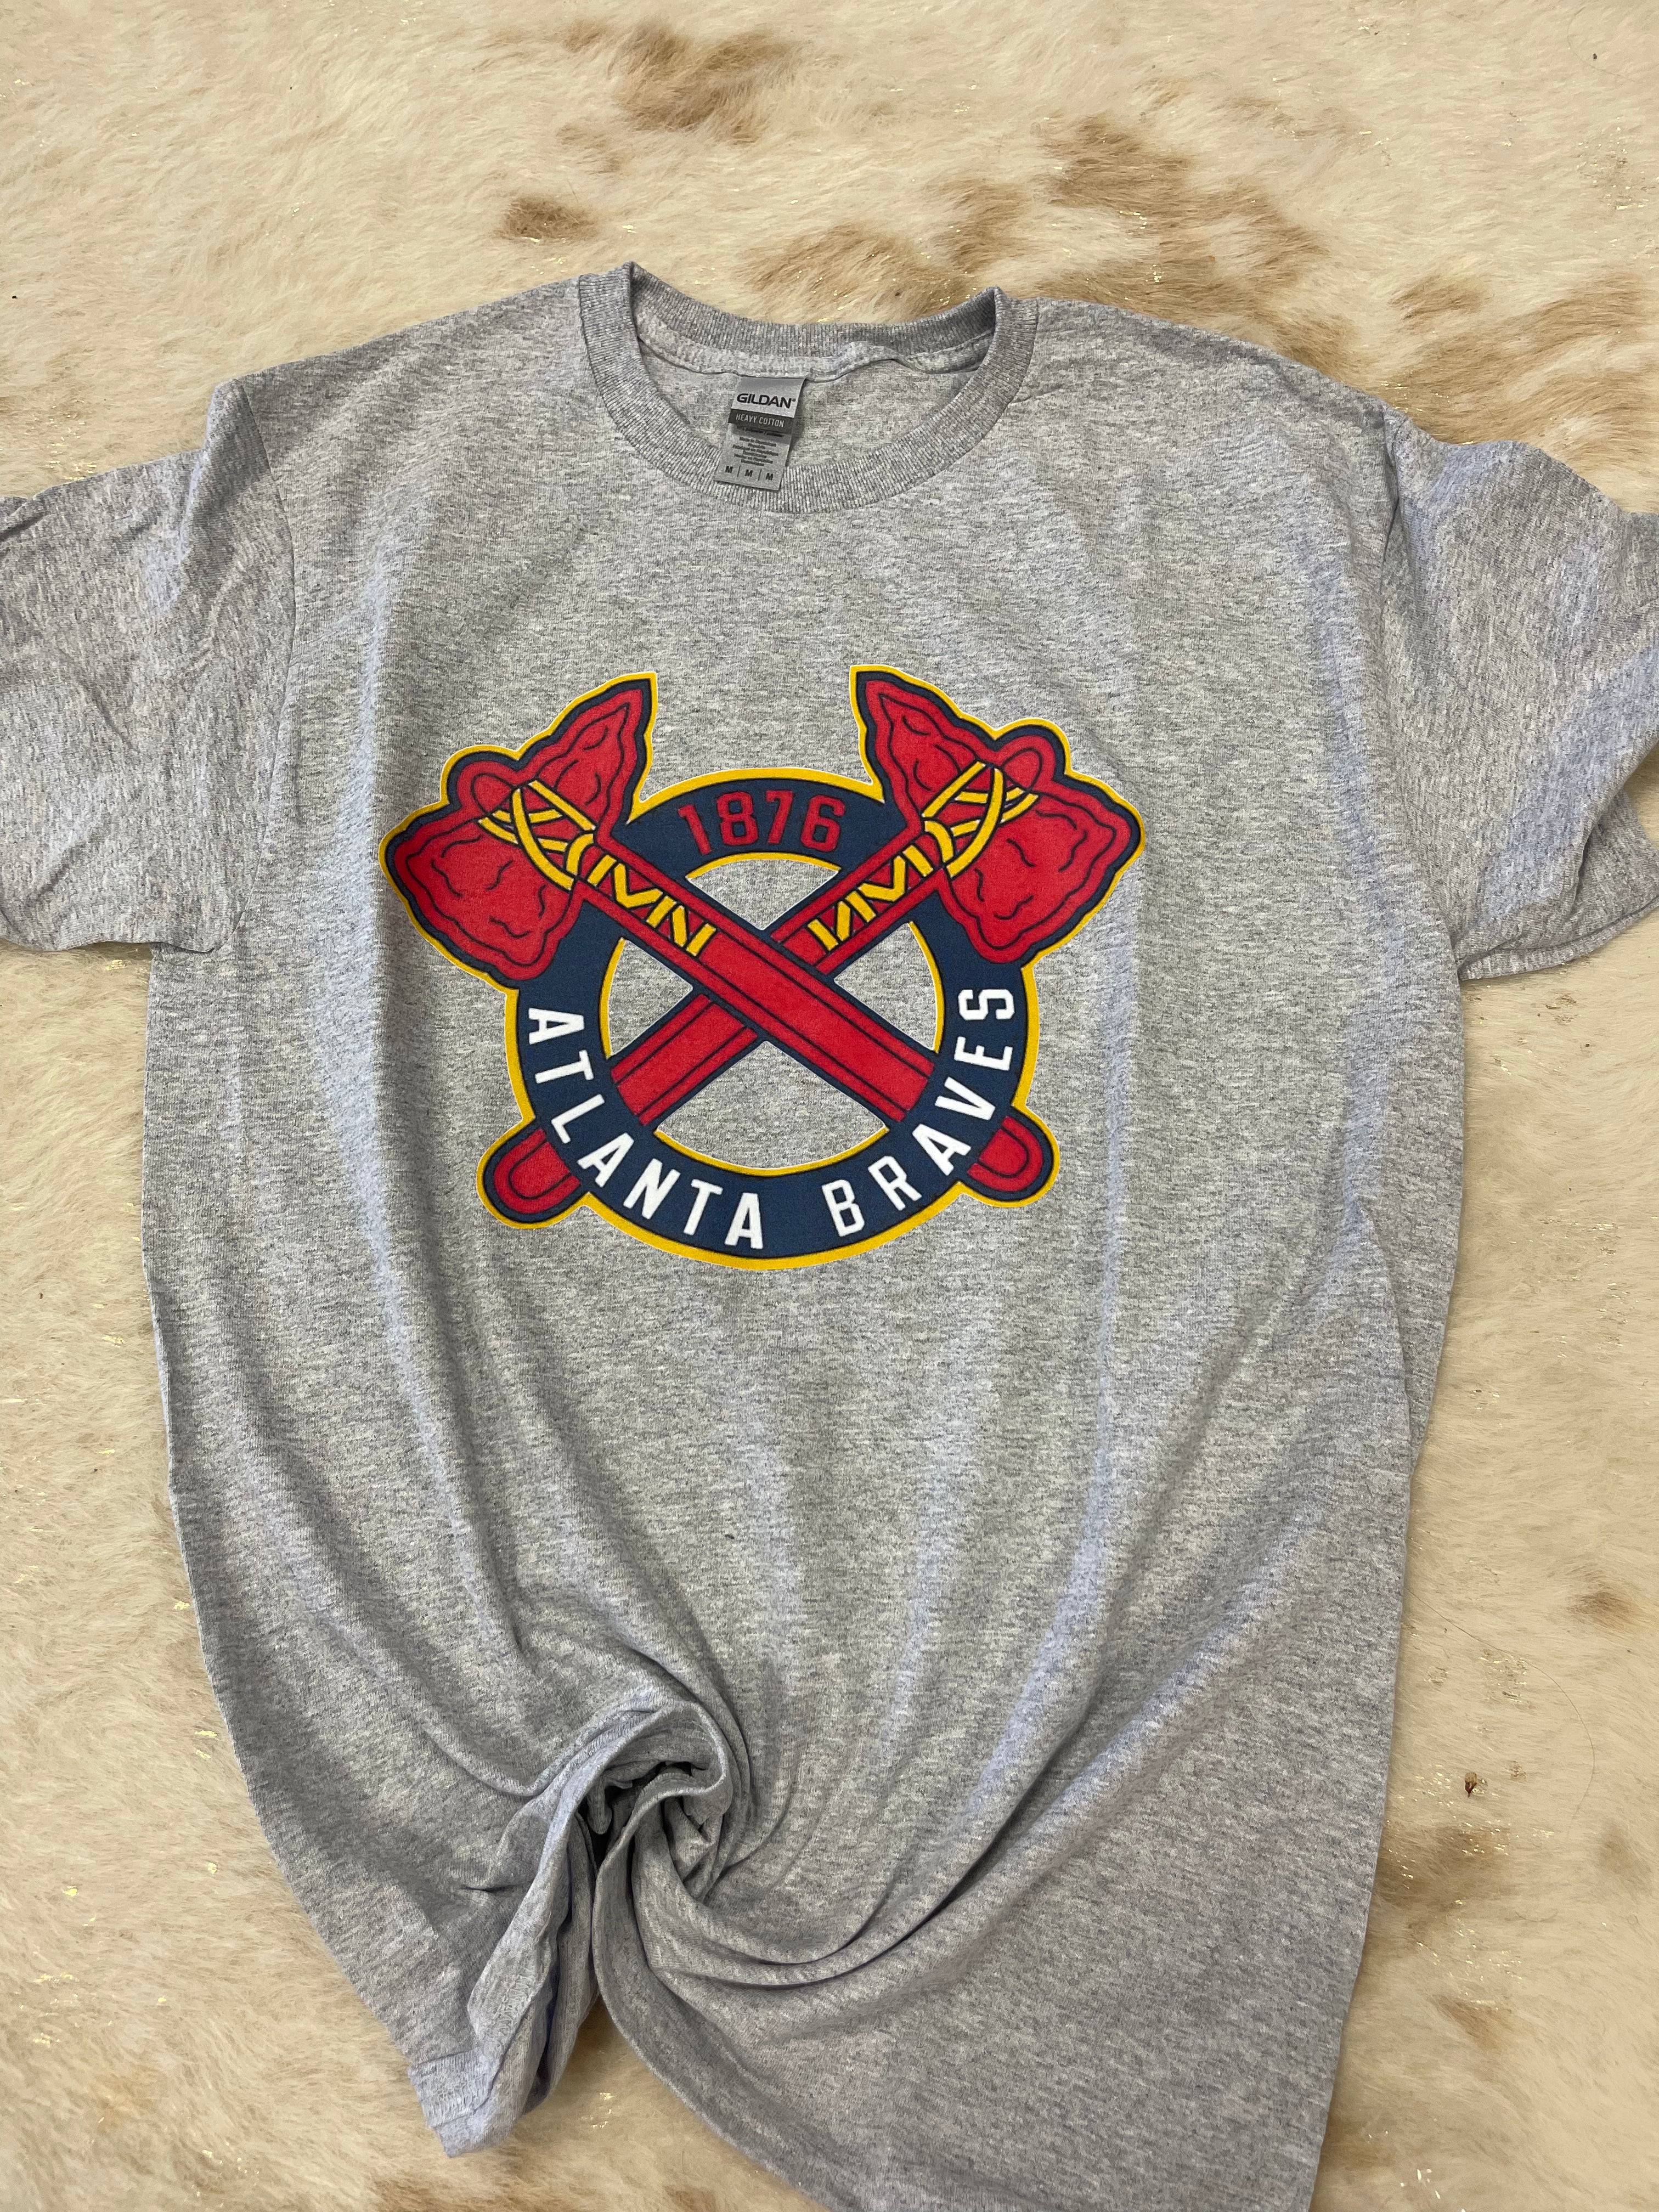 Vintage Atlanta Braves Tomahawk T-Shirt